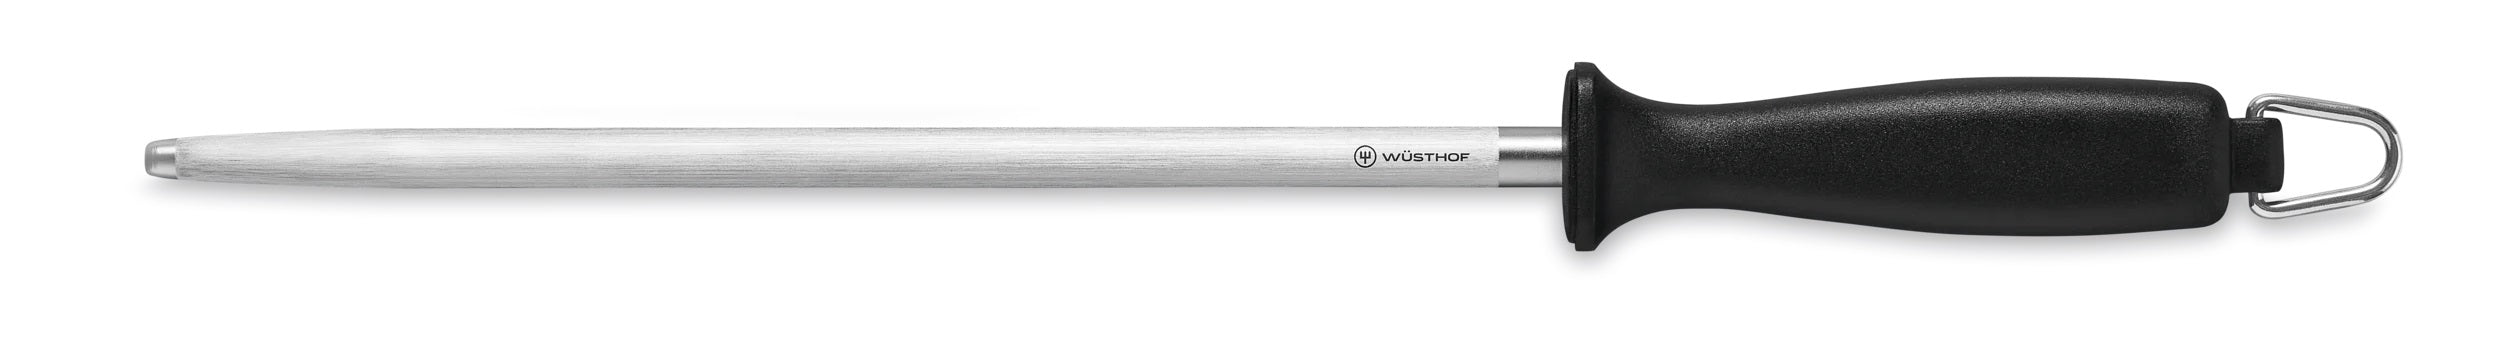 Wusthof Honing Steel 10" Sharpening - 3039700526